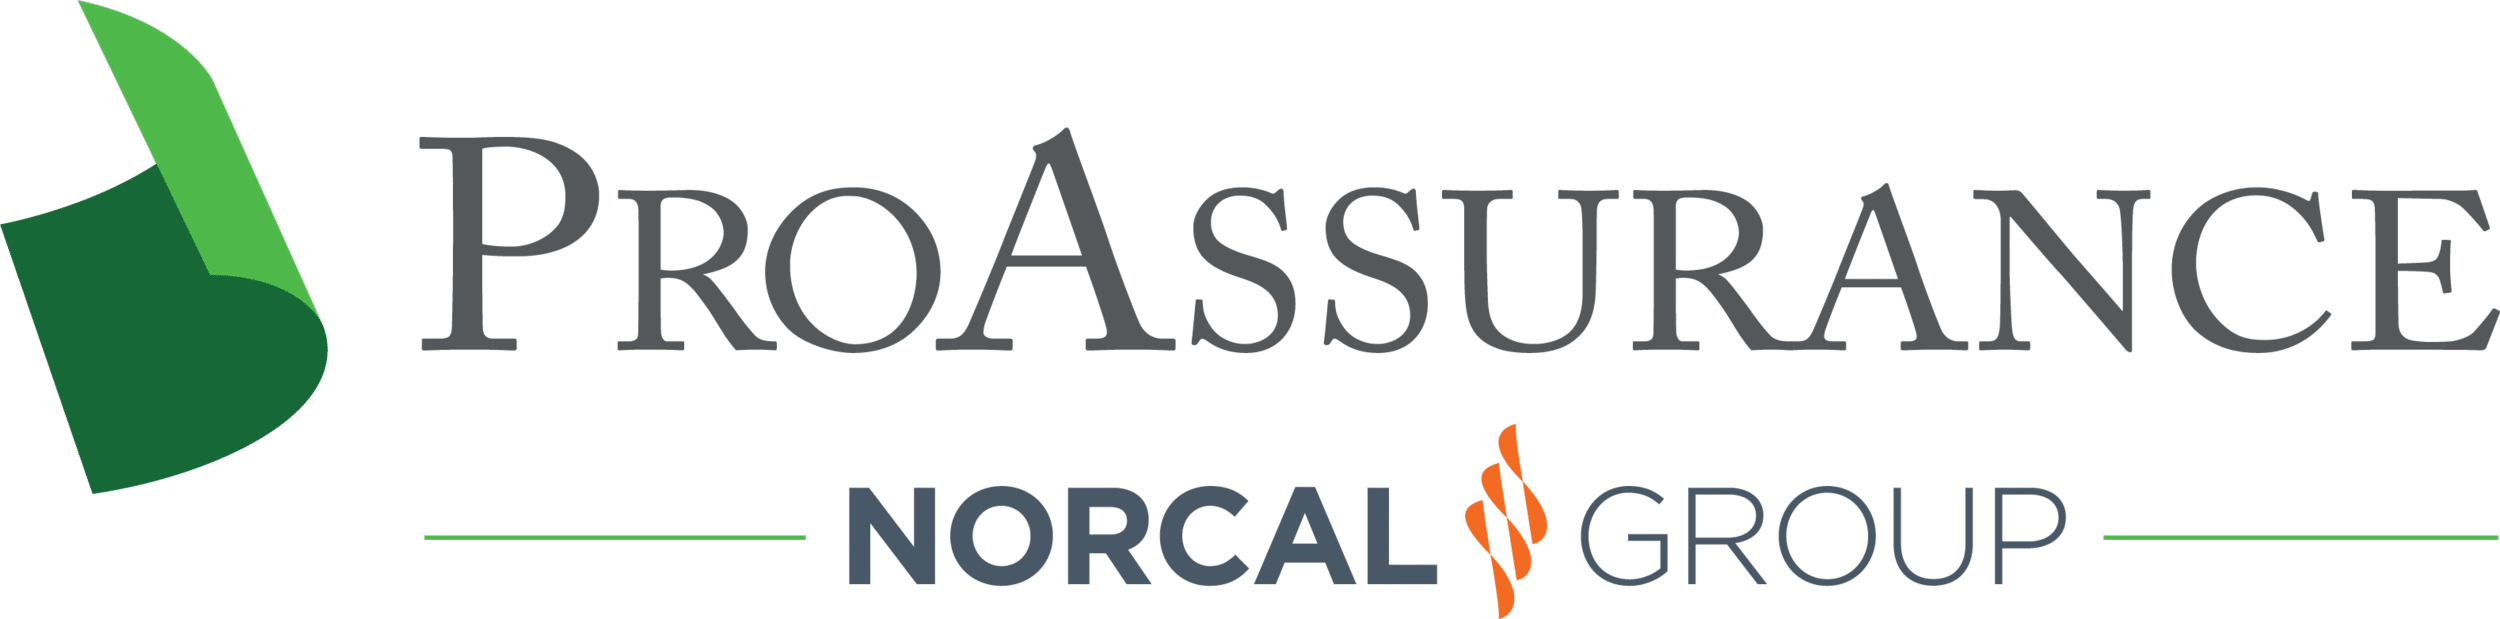 proassurance_norcal+logo_2022